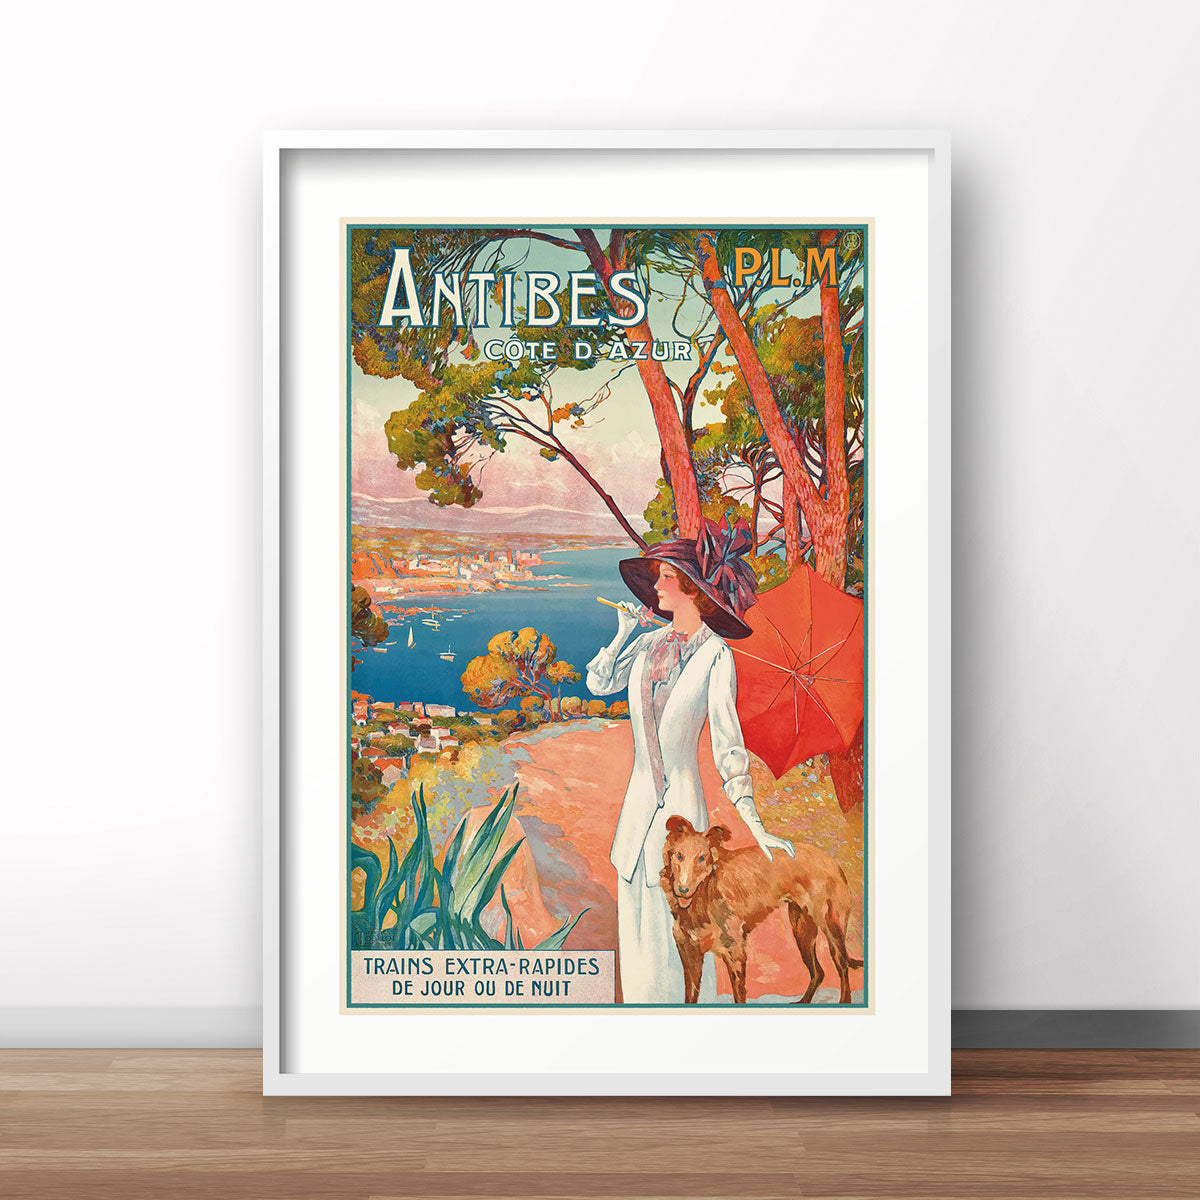 Antibes côte d'Azur retro travel poster - Places We Luv